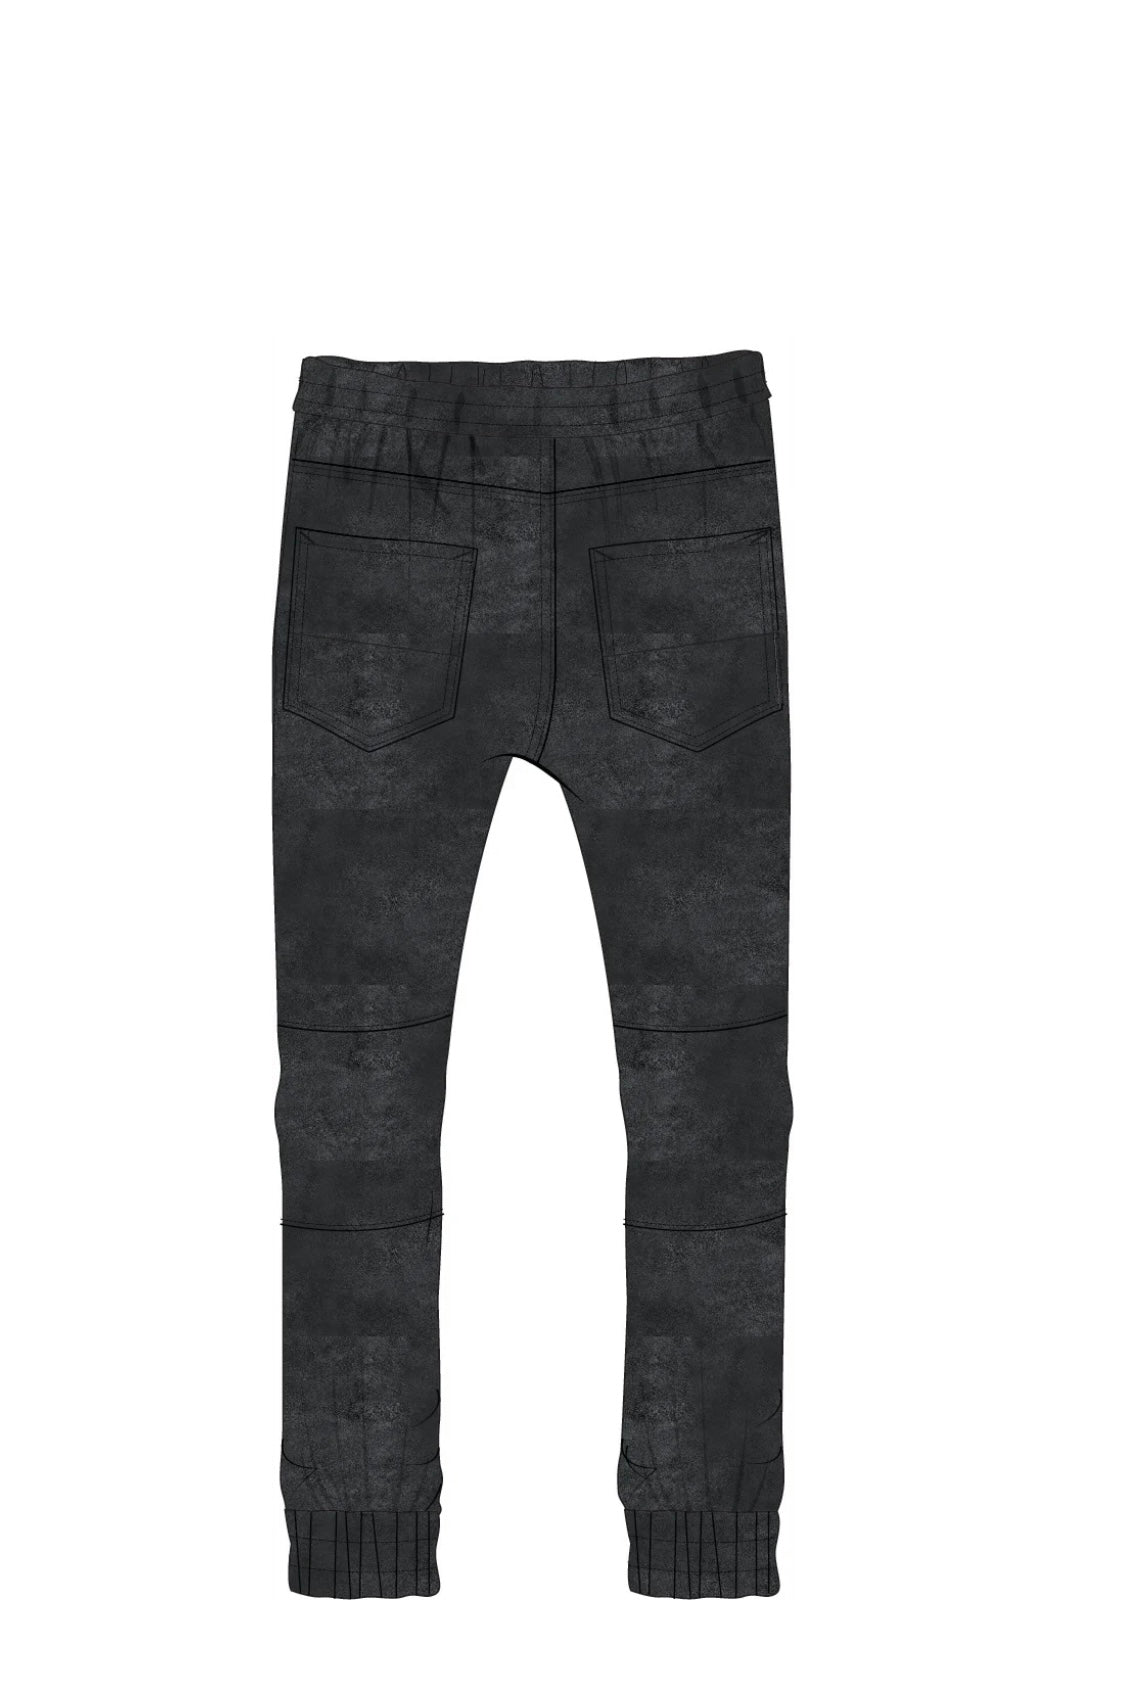 Sunnyville Ollie Hybrid Pant - Washed Black